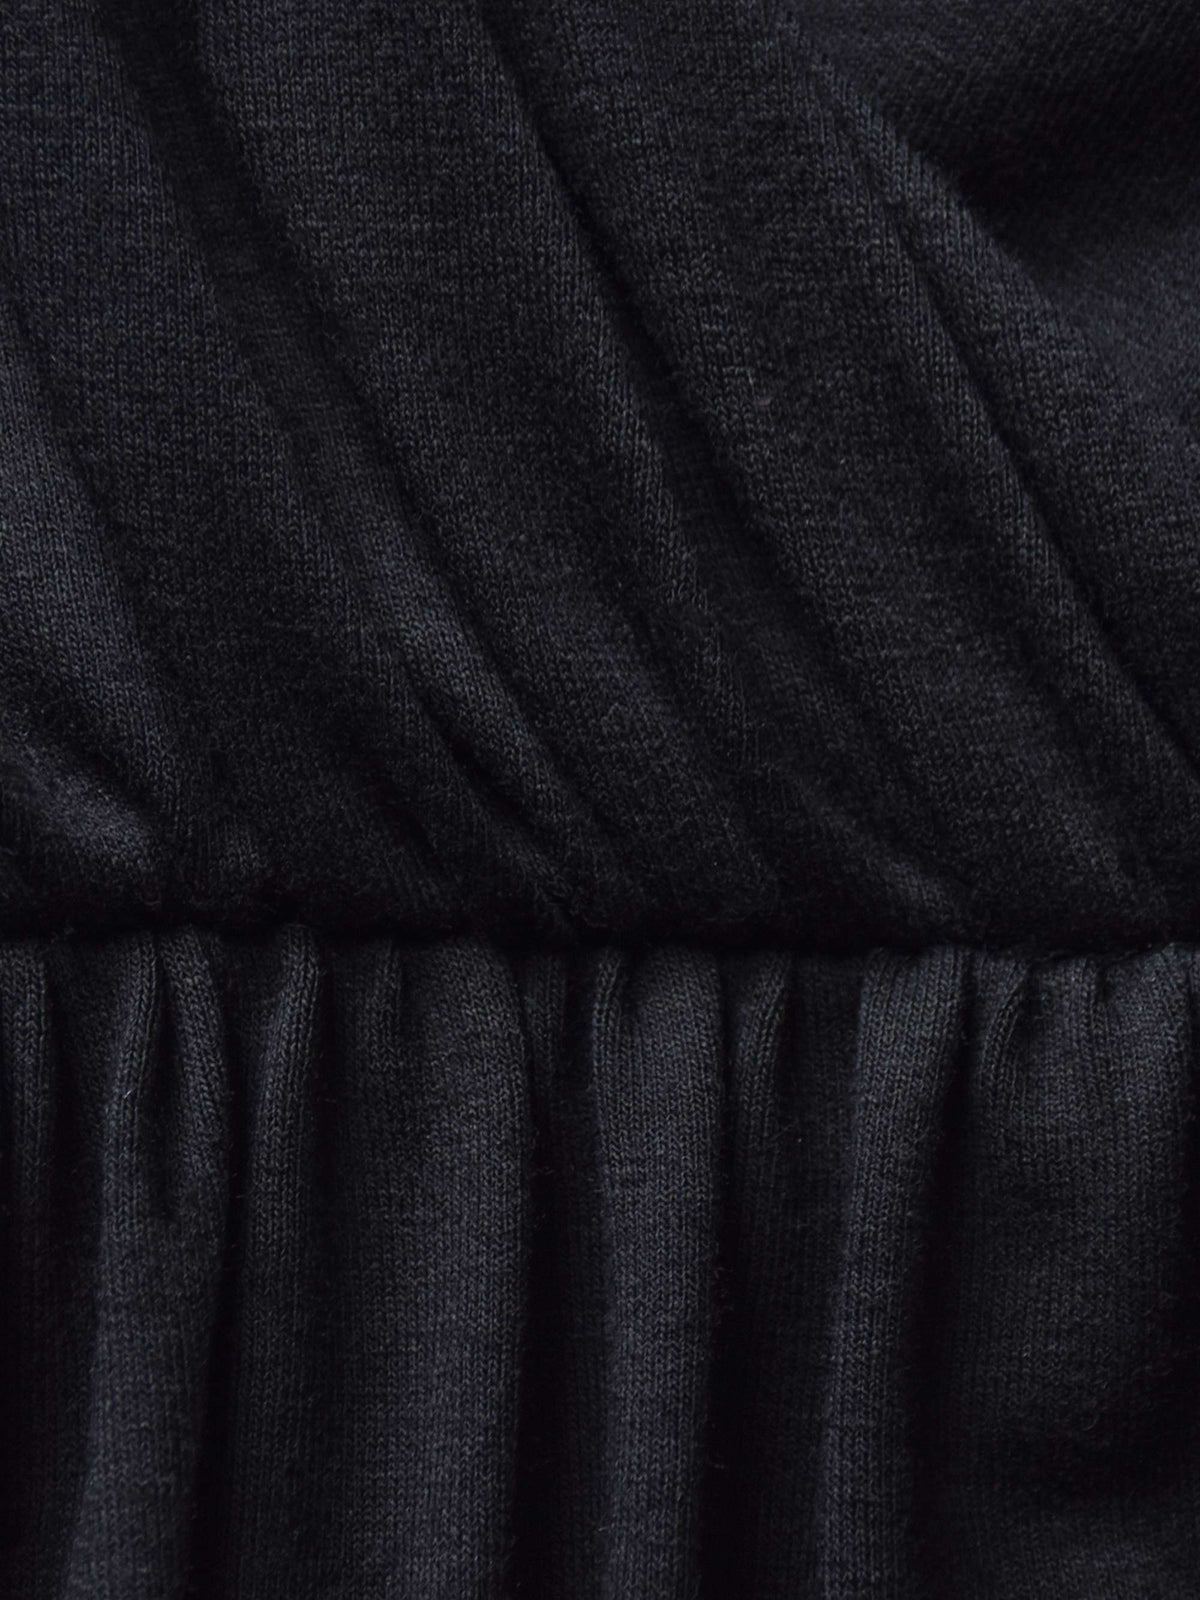 Petite Black Jersey Long Sleeve Wrap Dress